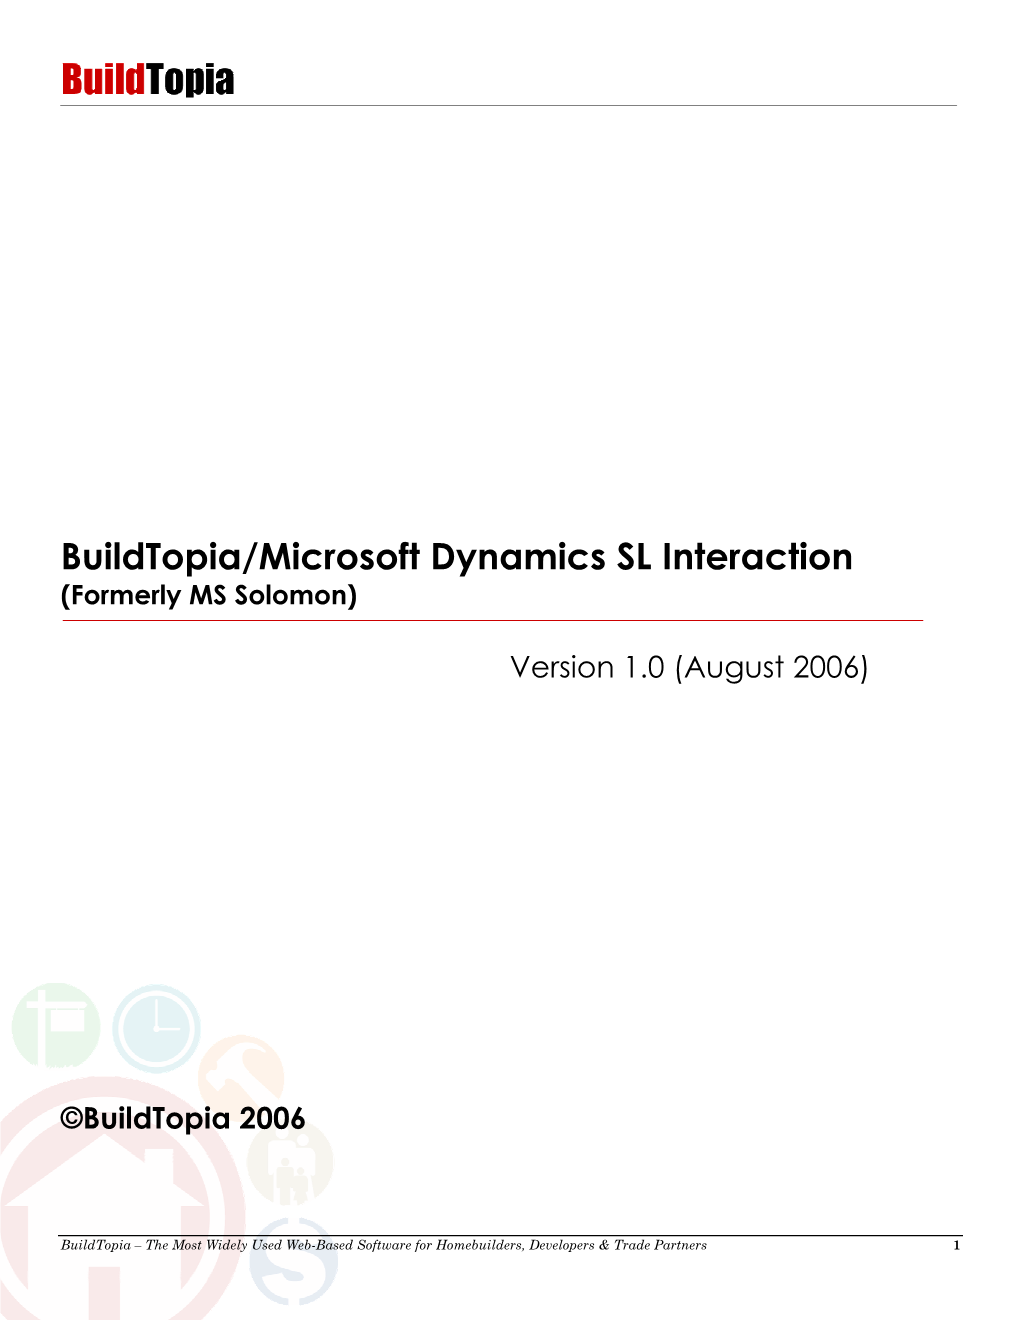 Buildtopia/Microsoft Dynamics SL Interaction (Formerly MS Solomon)